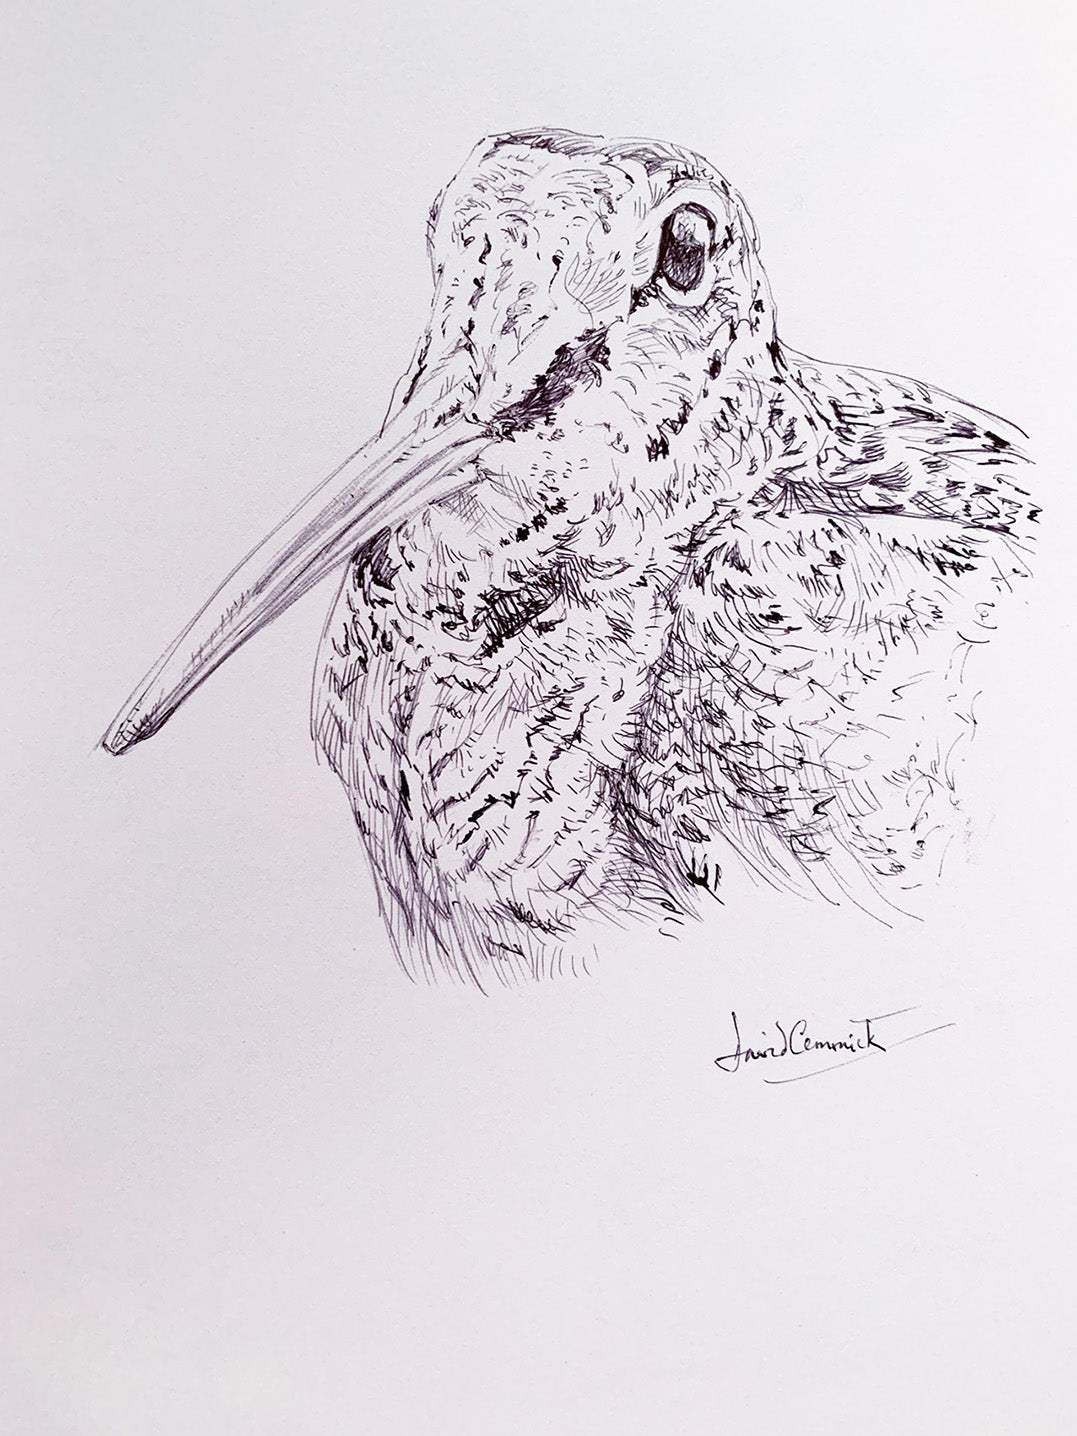 'Woodcock’ - Original Ink Drawing by David Cemmick - 35 x 25cm